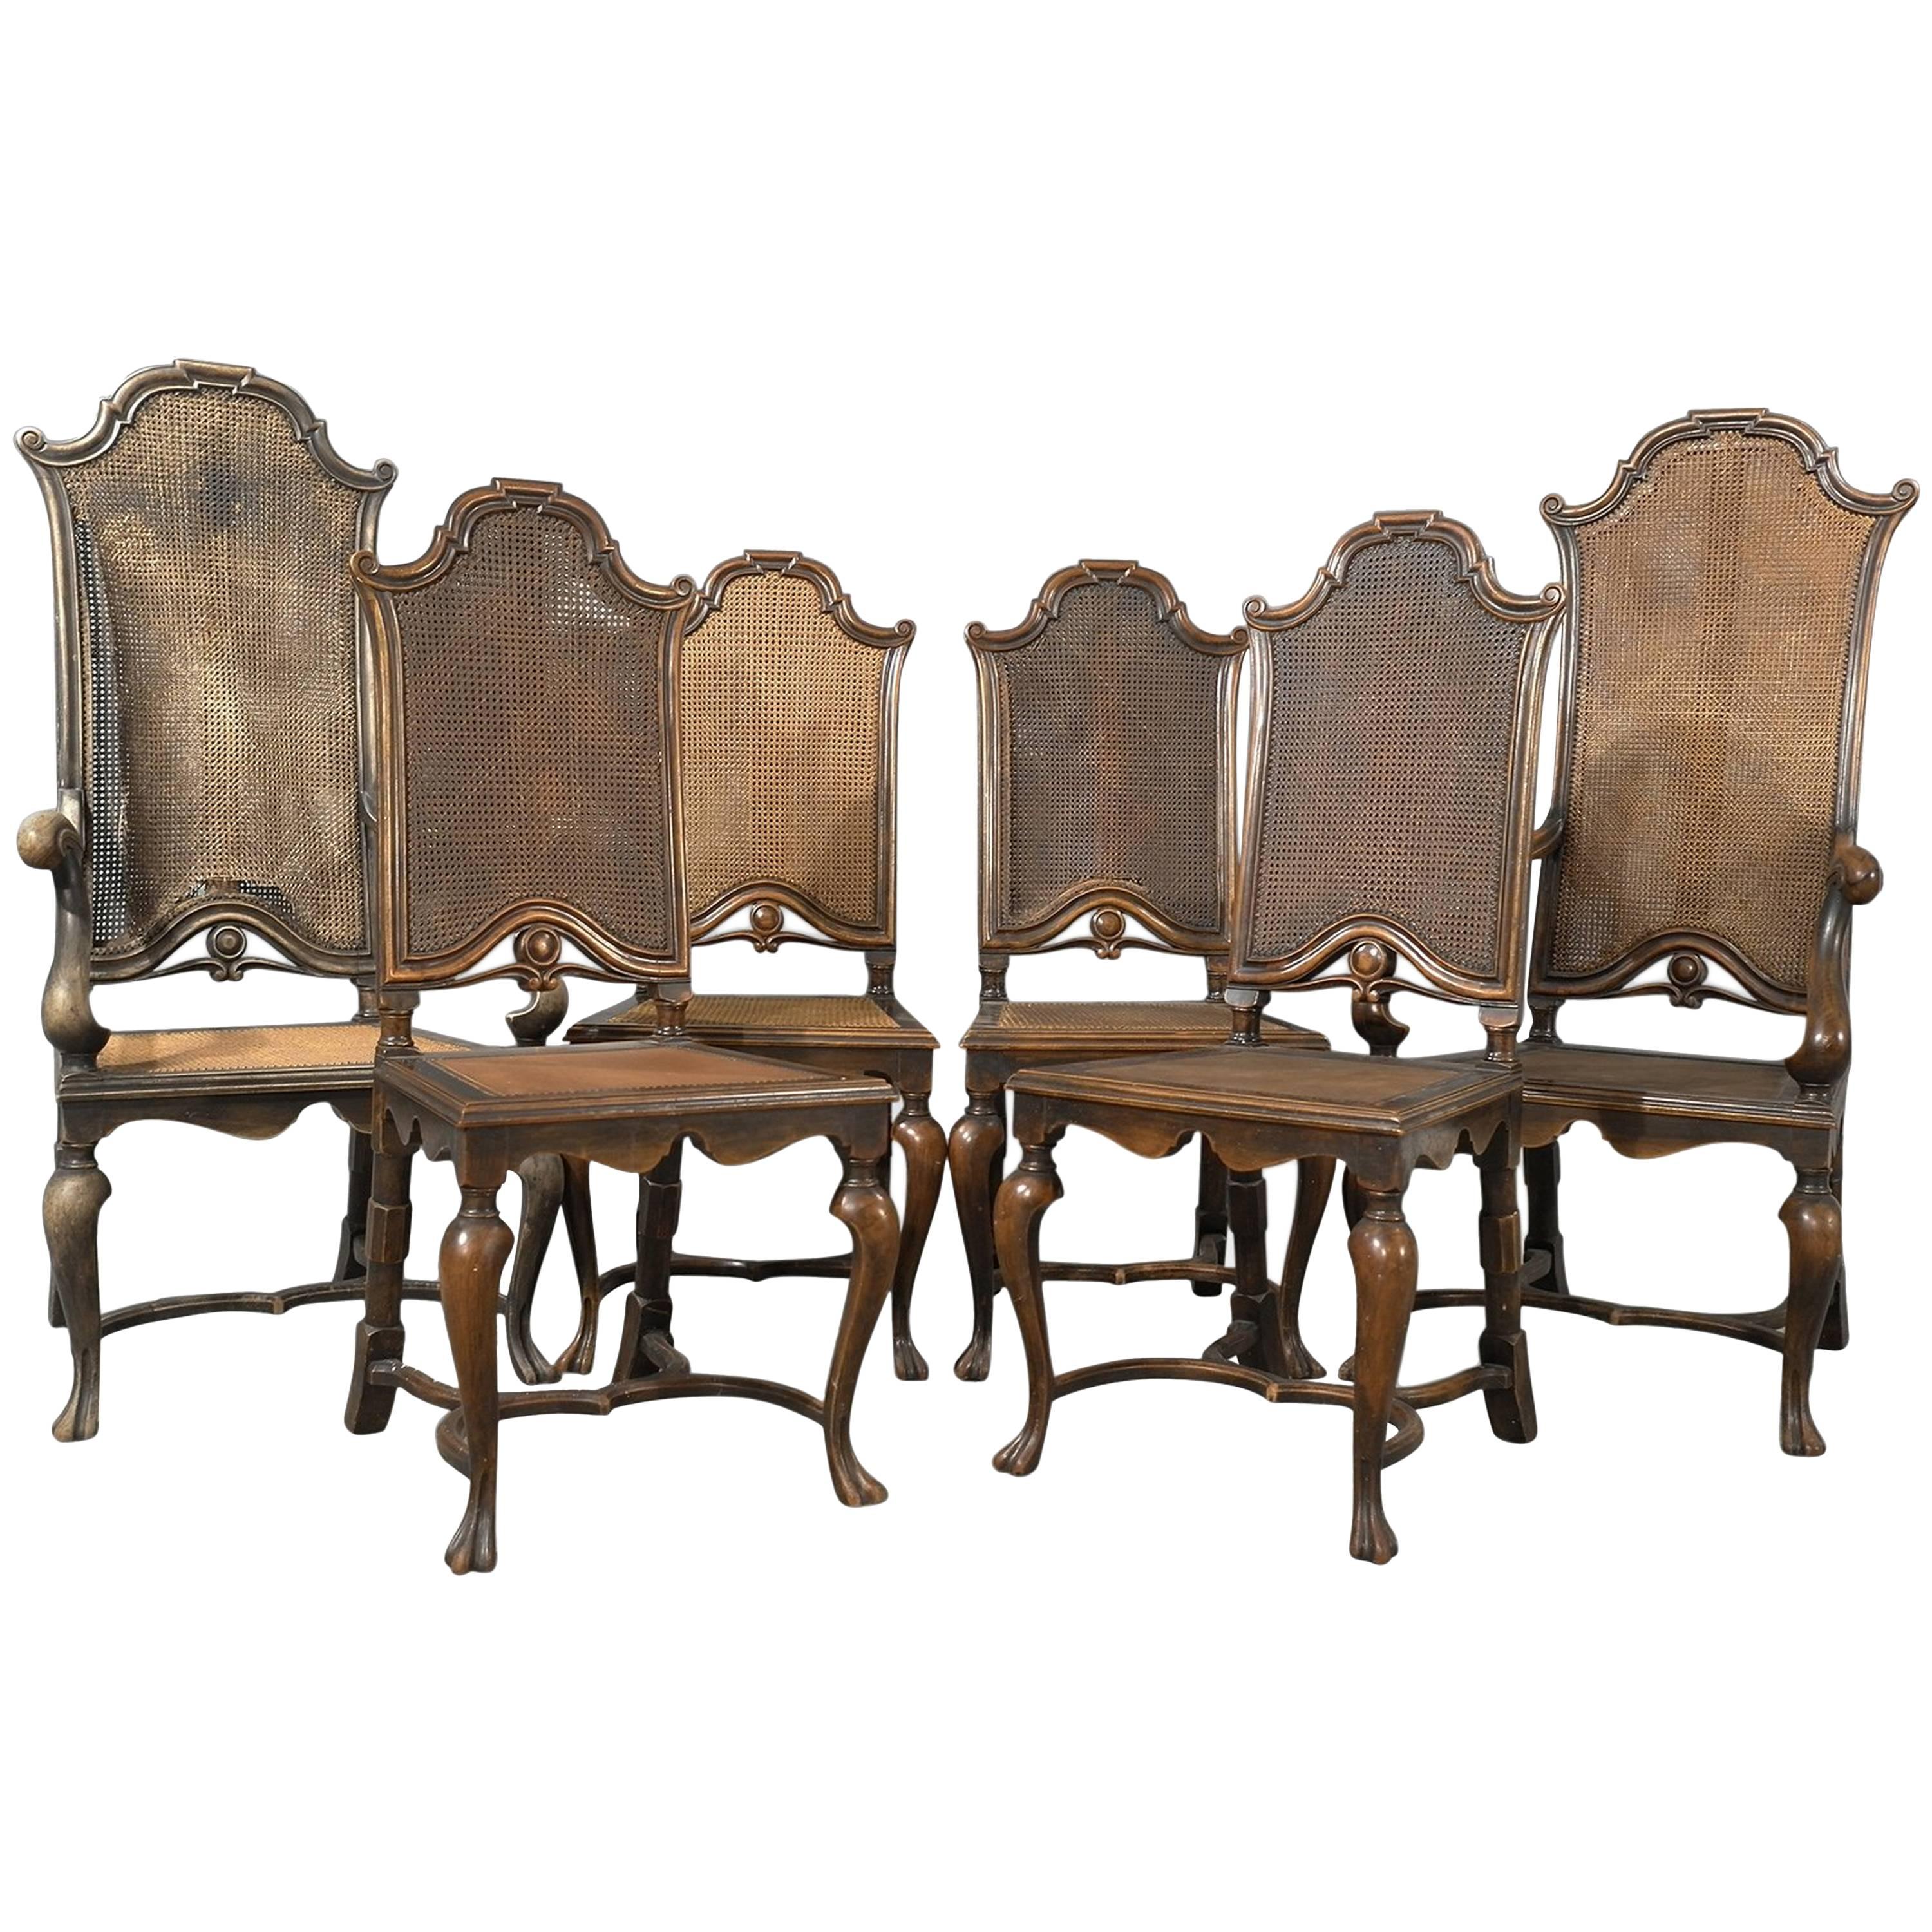 Set of Six, Antique Dining Chairs, Liberty of London, Walnut, Cane, Circa 1880